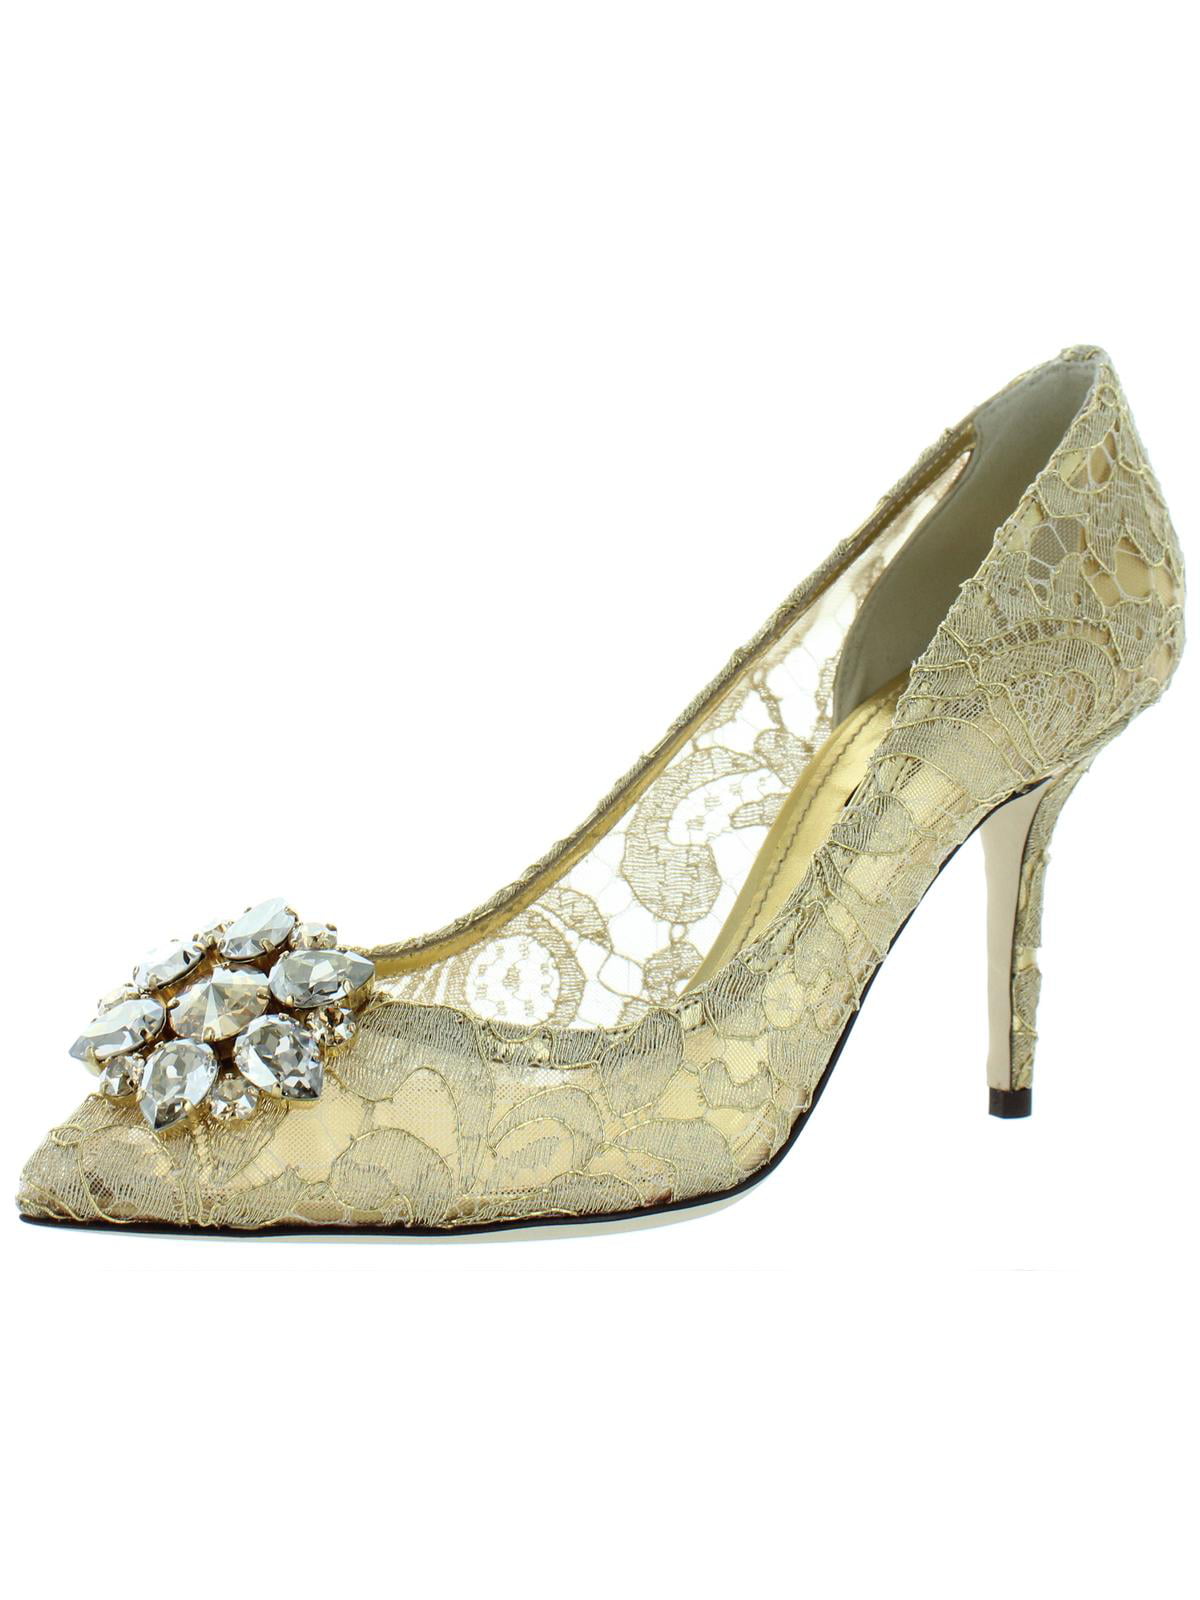 Dolce & Gabbana Black Floral Print Crystal Heels Pumps Shoes | Lyst